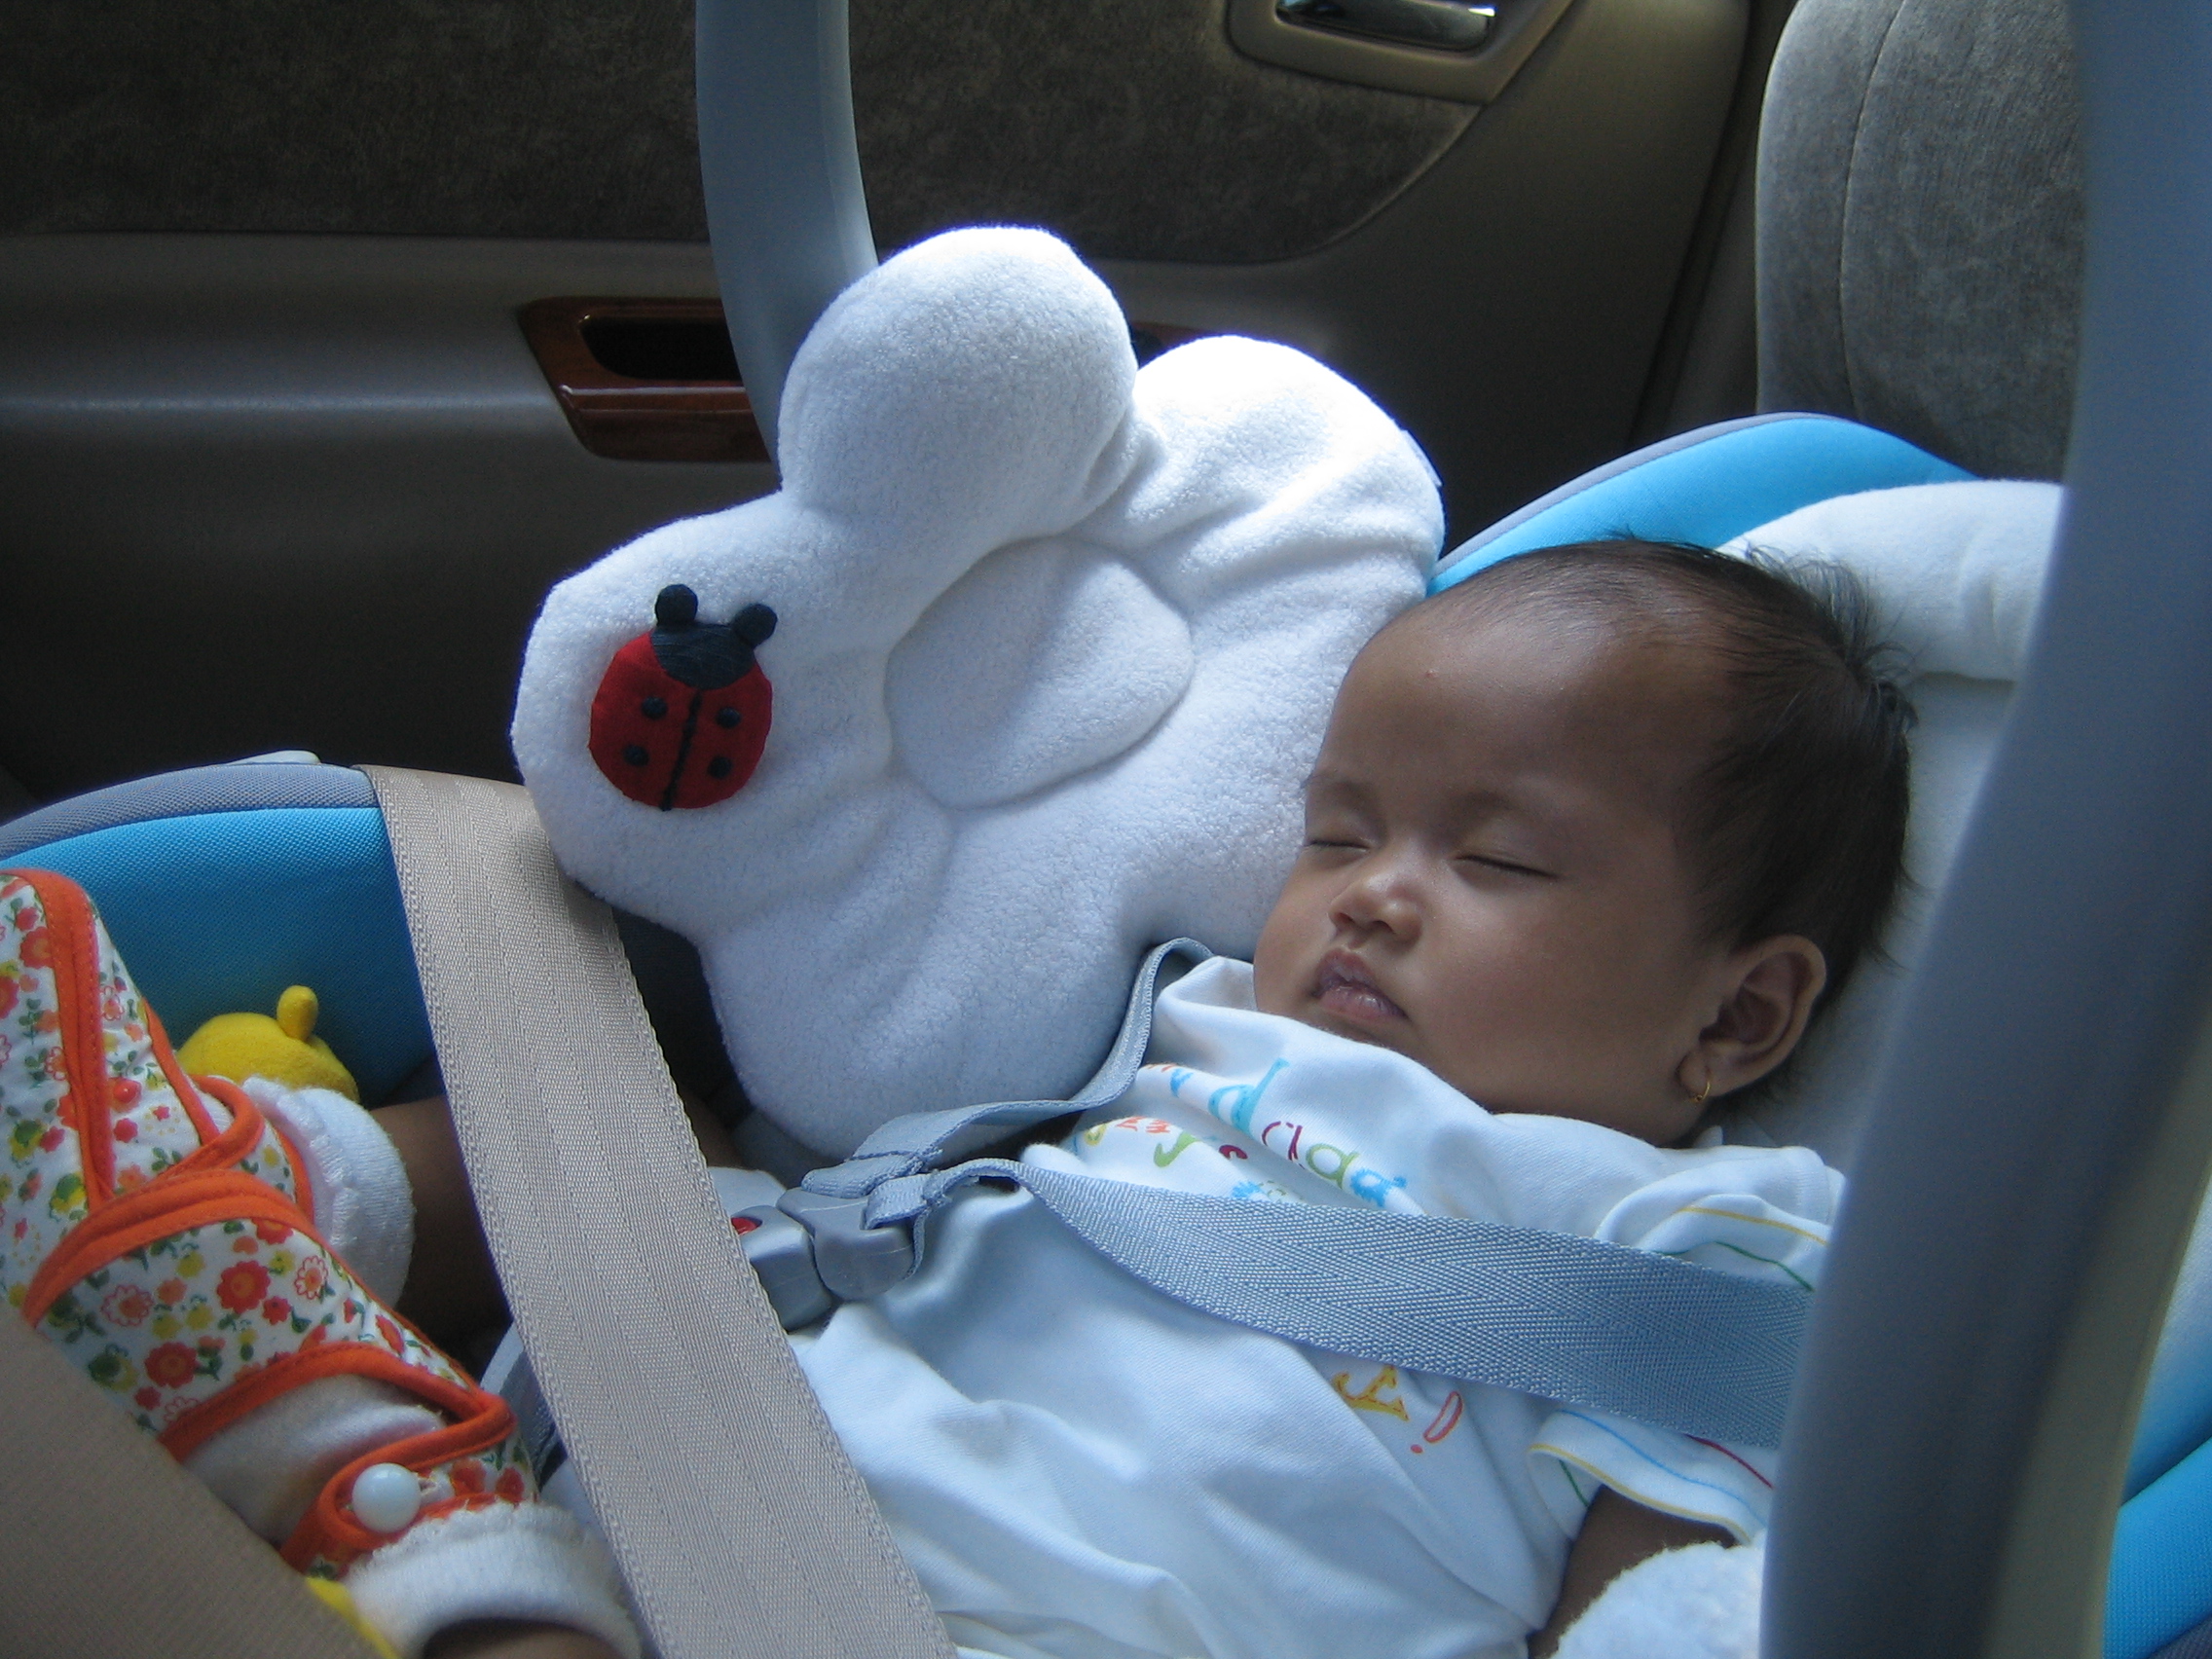 car seat pliko untuk newborn